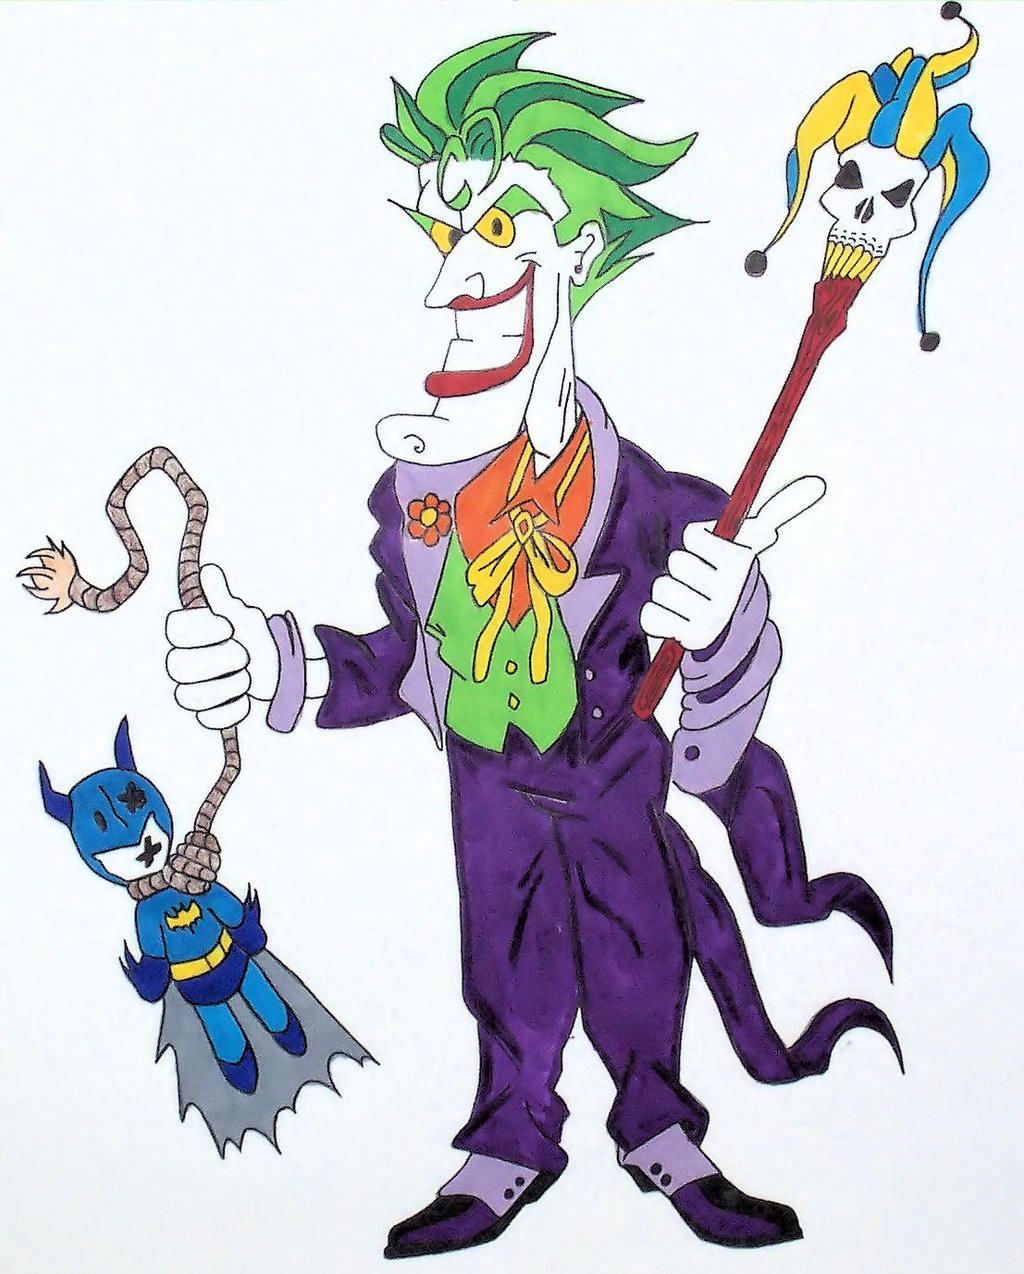 Joker's Favorite Toy